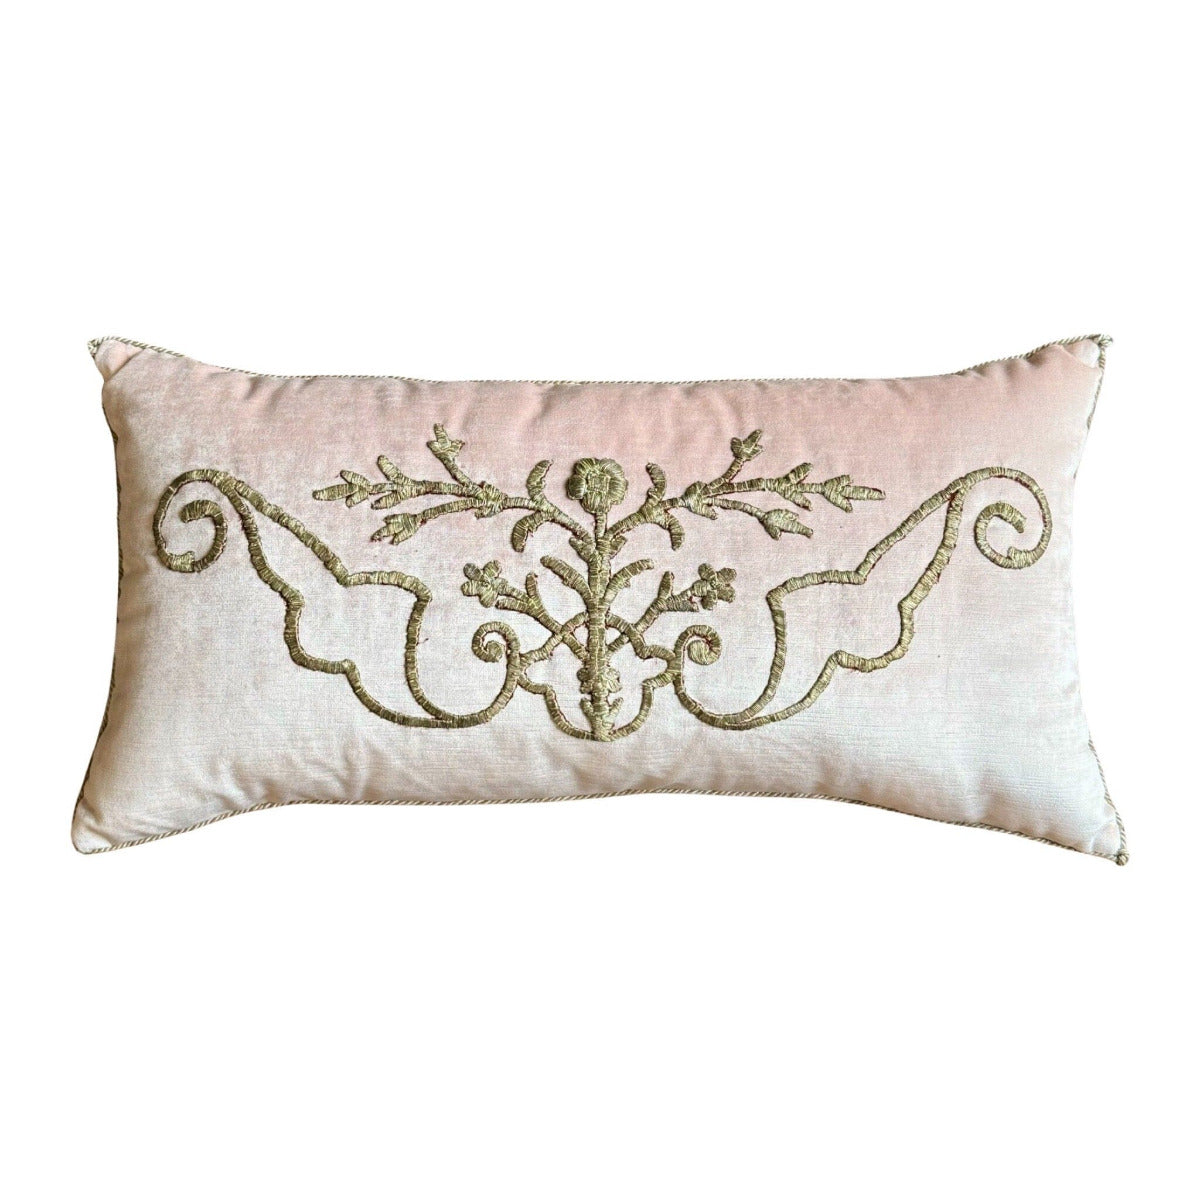 Antique Ottoman Empire Raised Silver Metallic Embroidery (#E021624 | 14 x 27") New Pillows B. Viz Design 